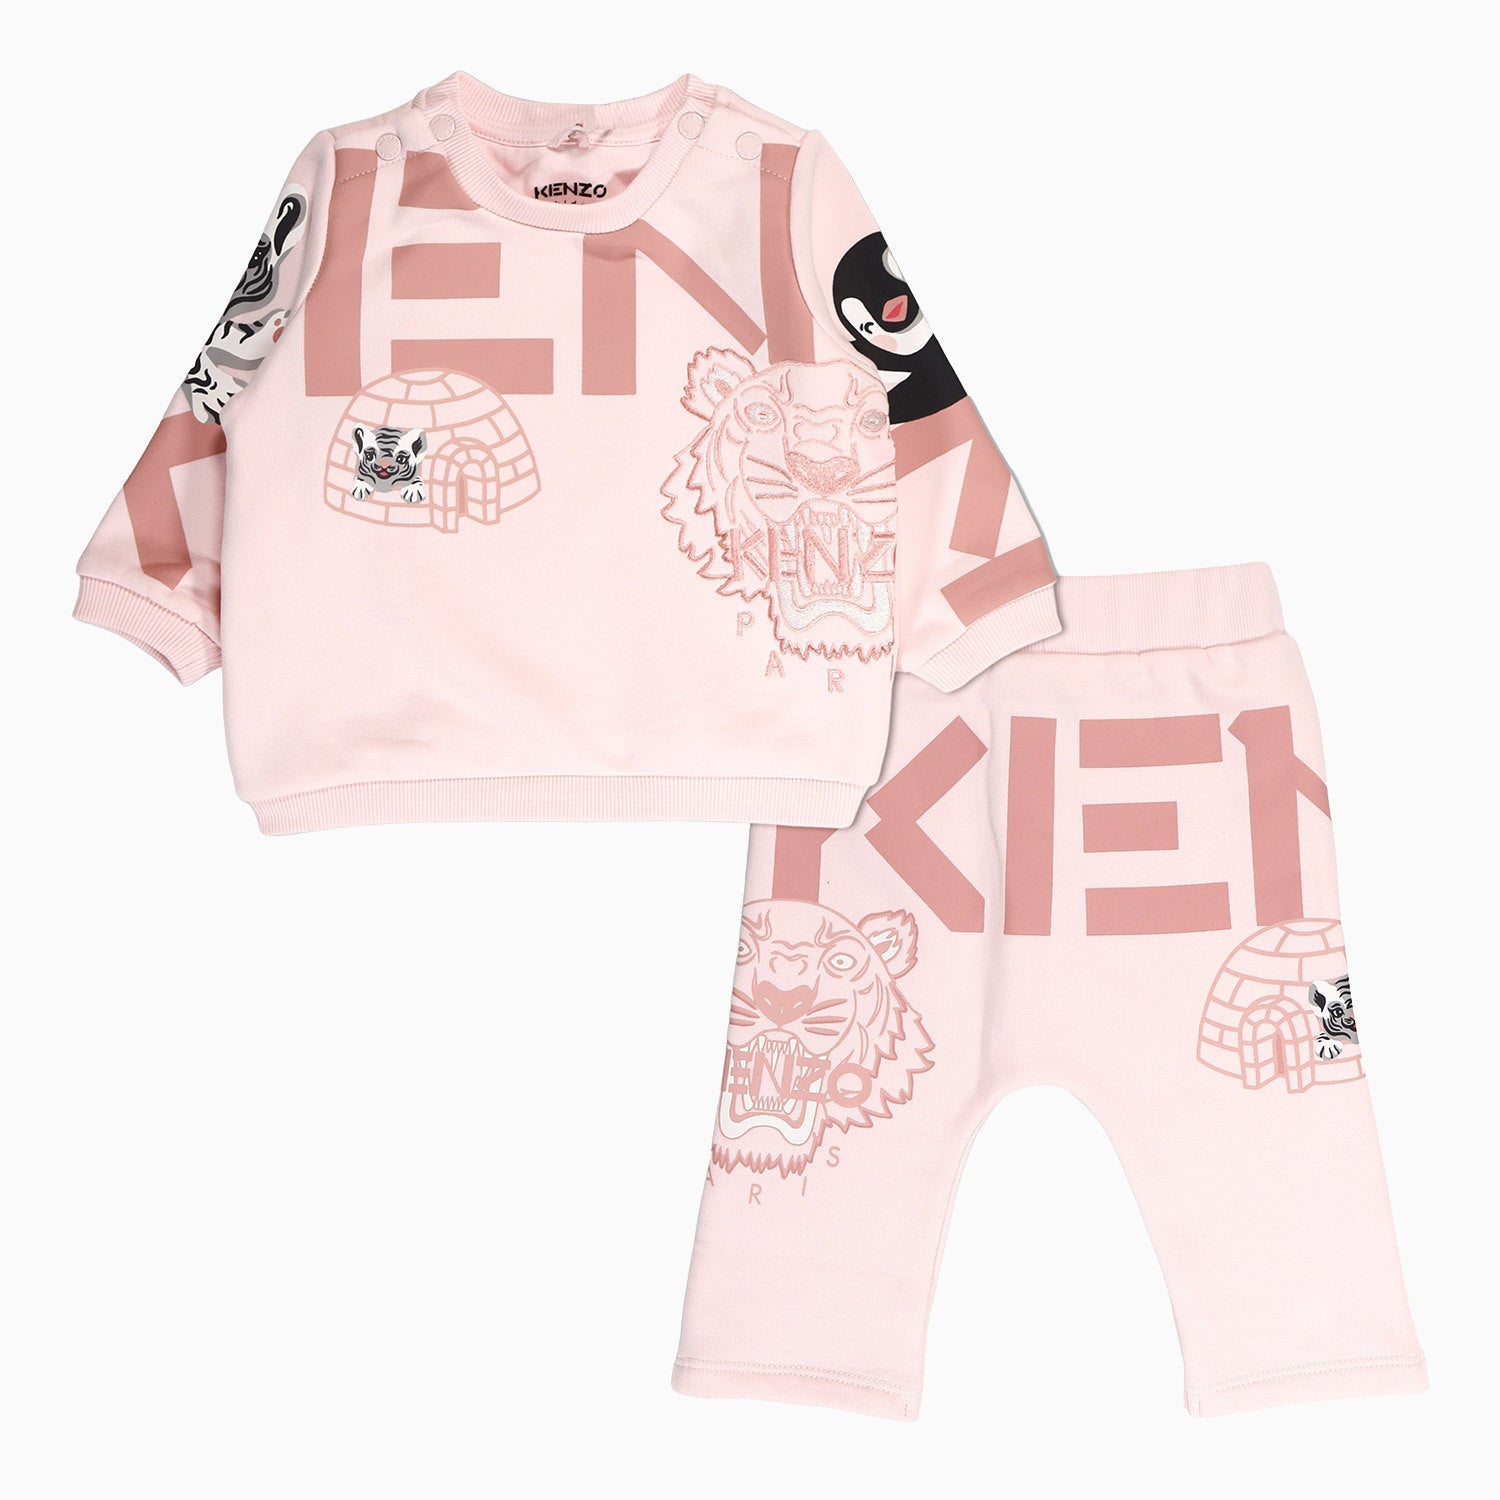 kenzo-kids-tiger-print-outfit-k98066-44d